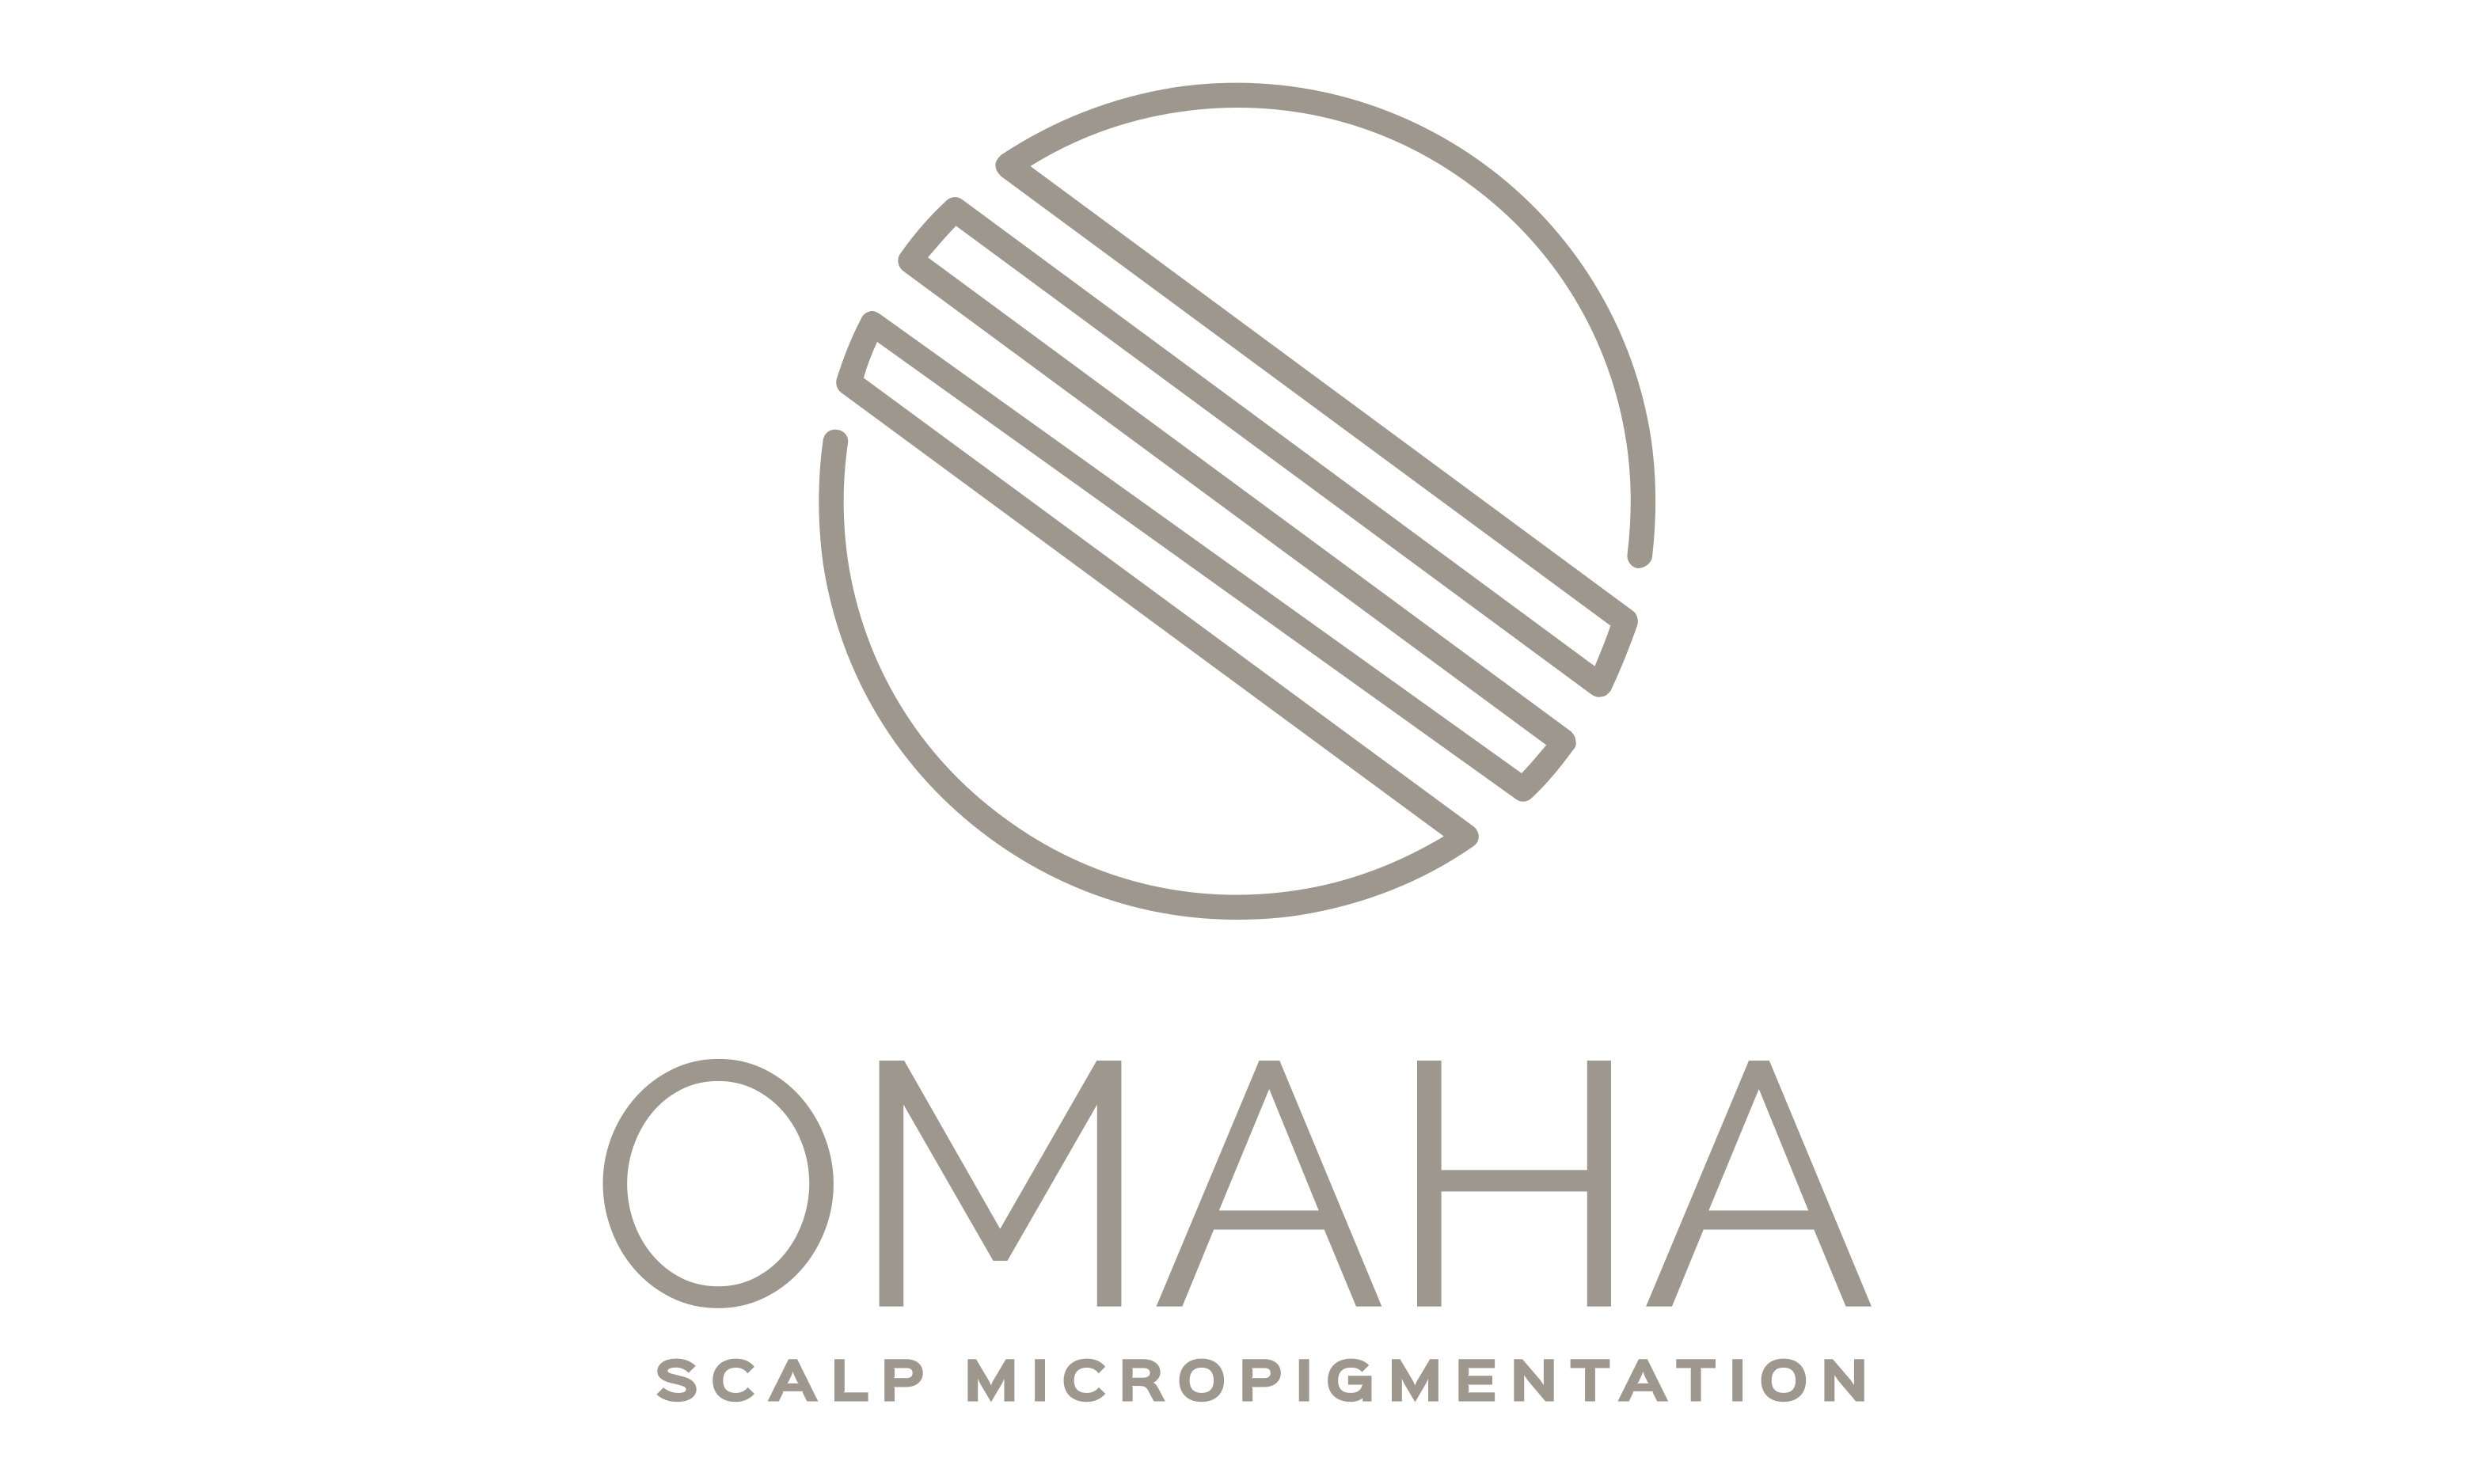 Omaha Scalp Micropigmentation